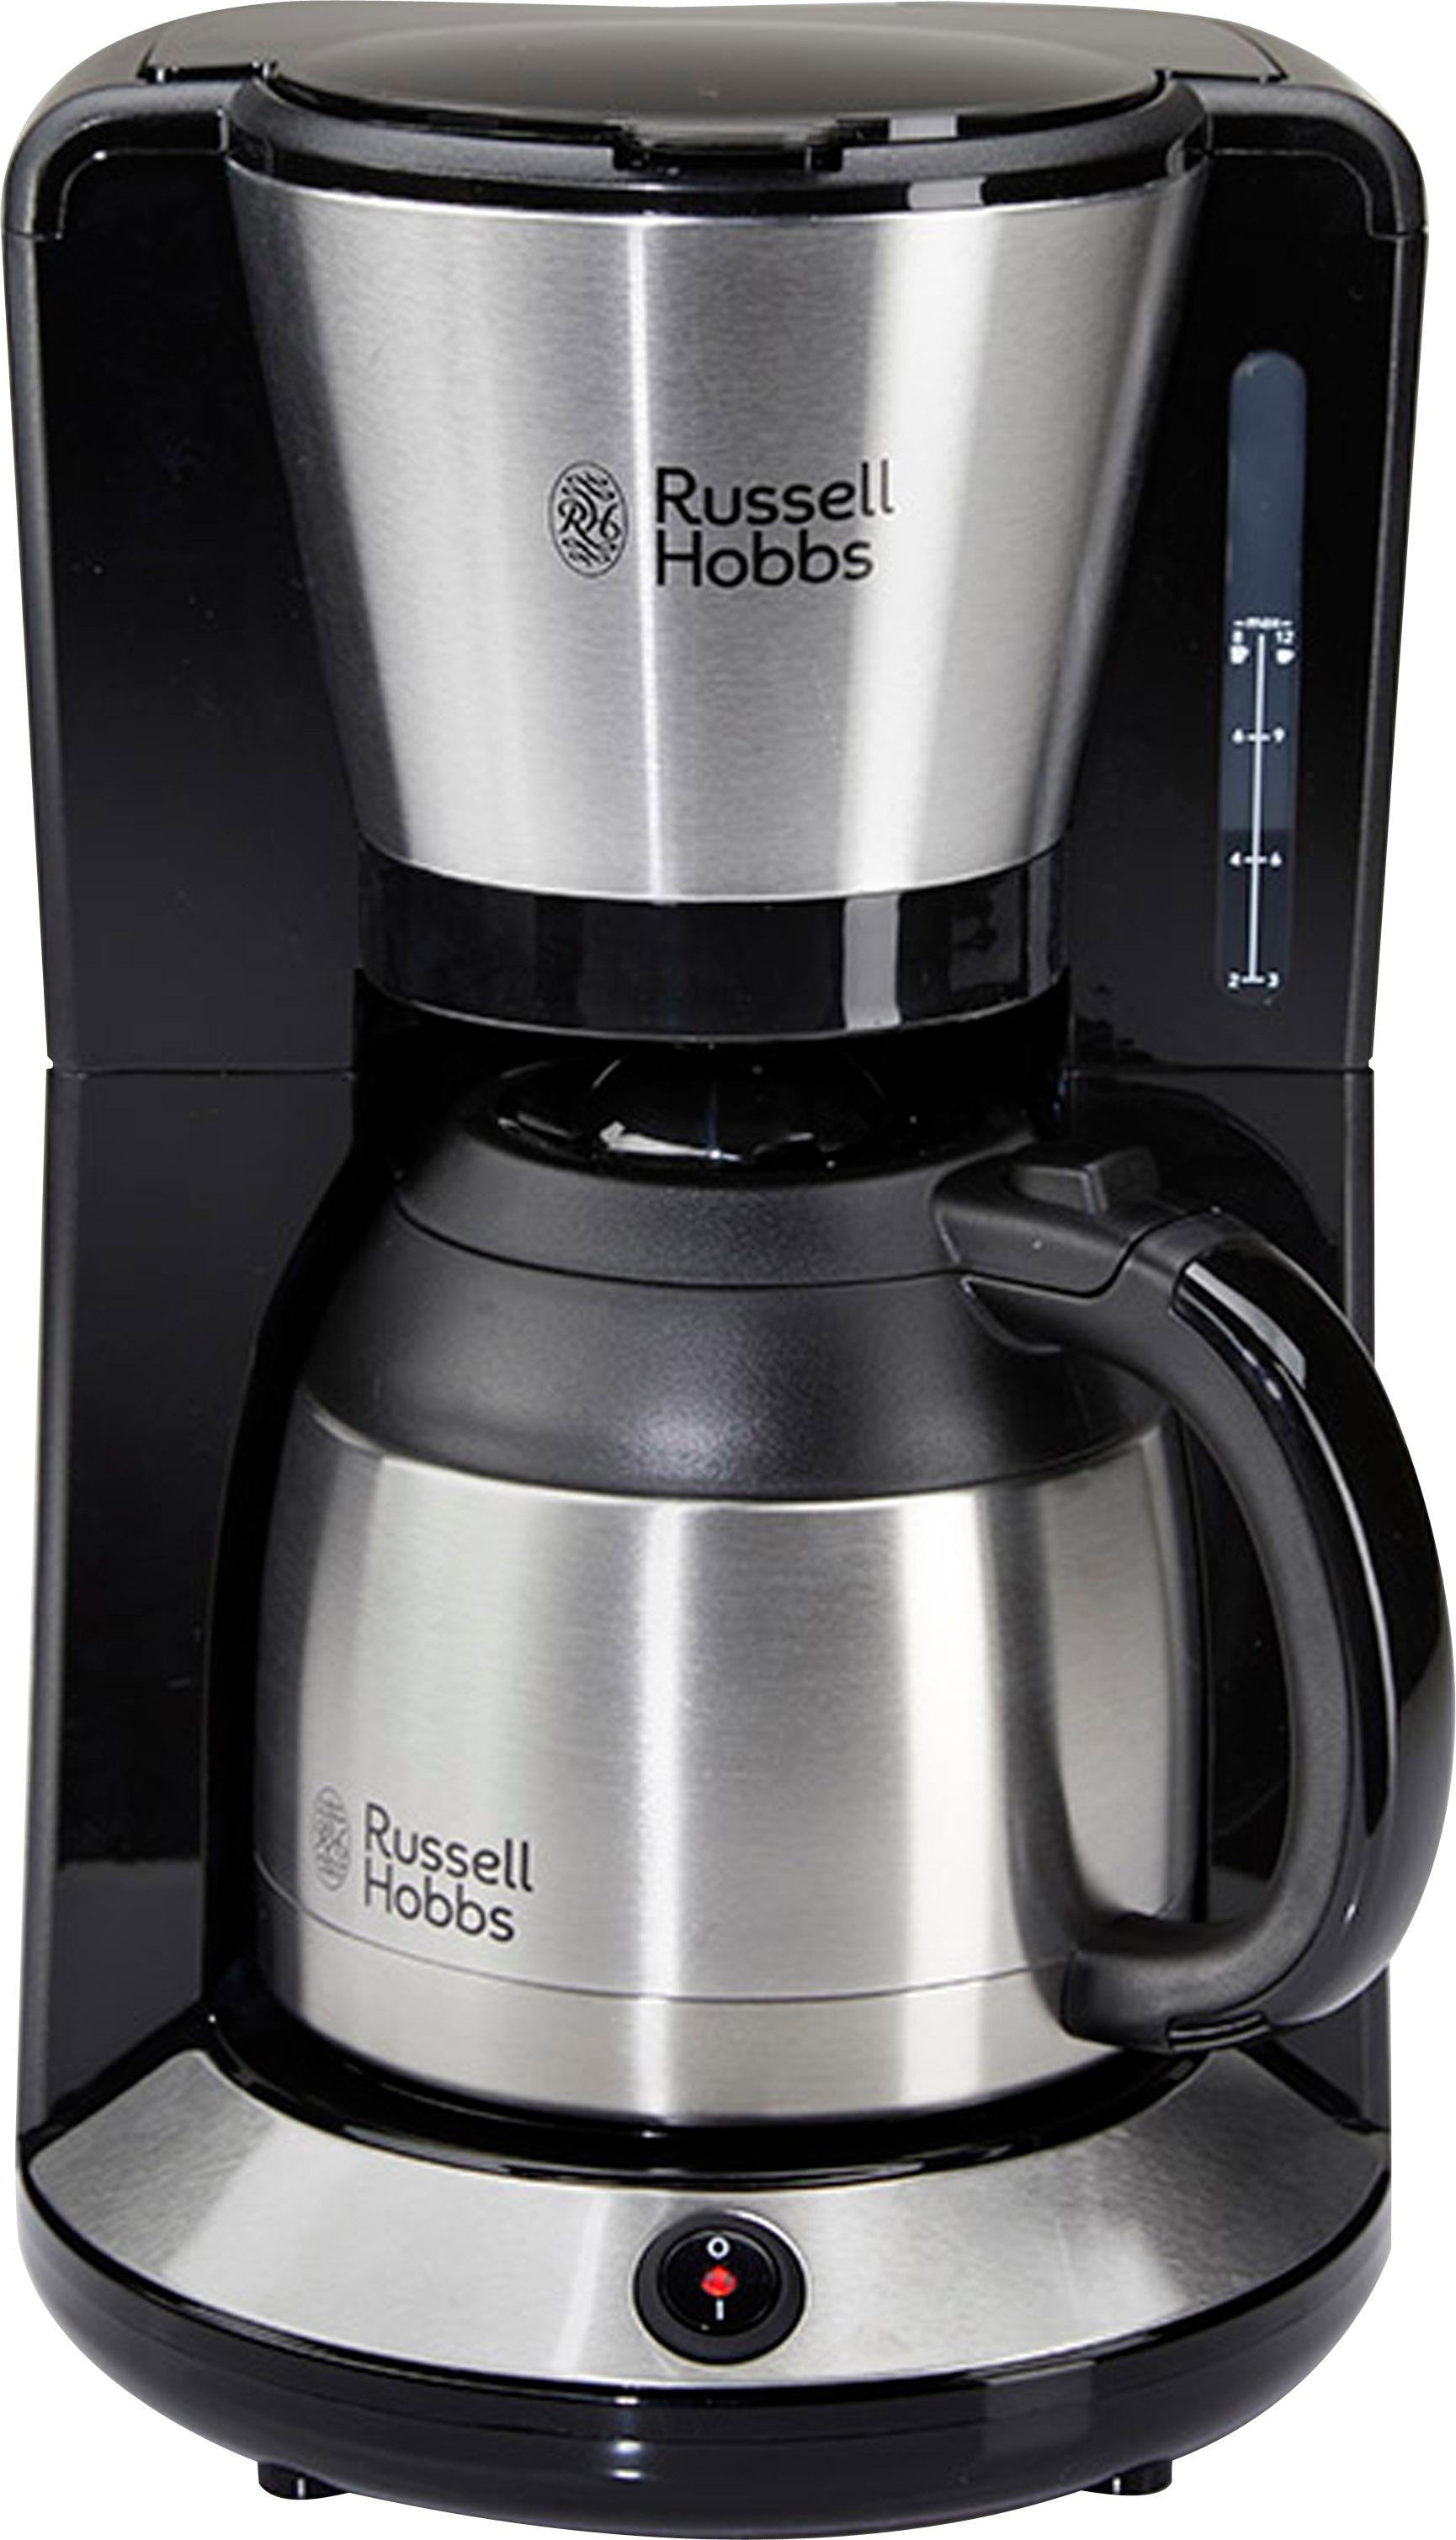 RUSSELL HOBBS Filterkaffeemaschine »Adventure 24020-56«, 1 l Kaffeekanne, Papierfilter, 1x4, mit Thermokanne, 1100 Watt, Edelstahl gebürstet